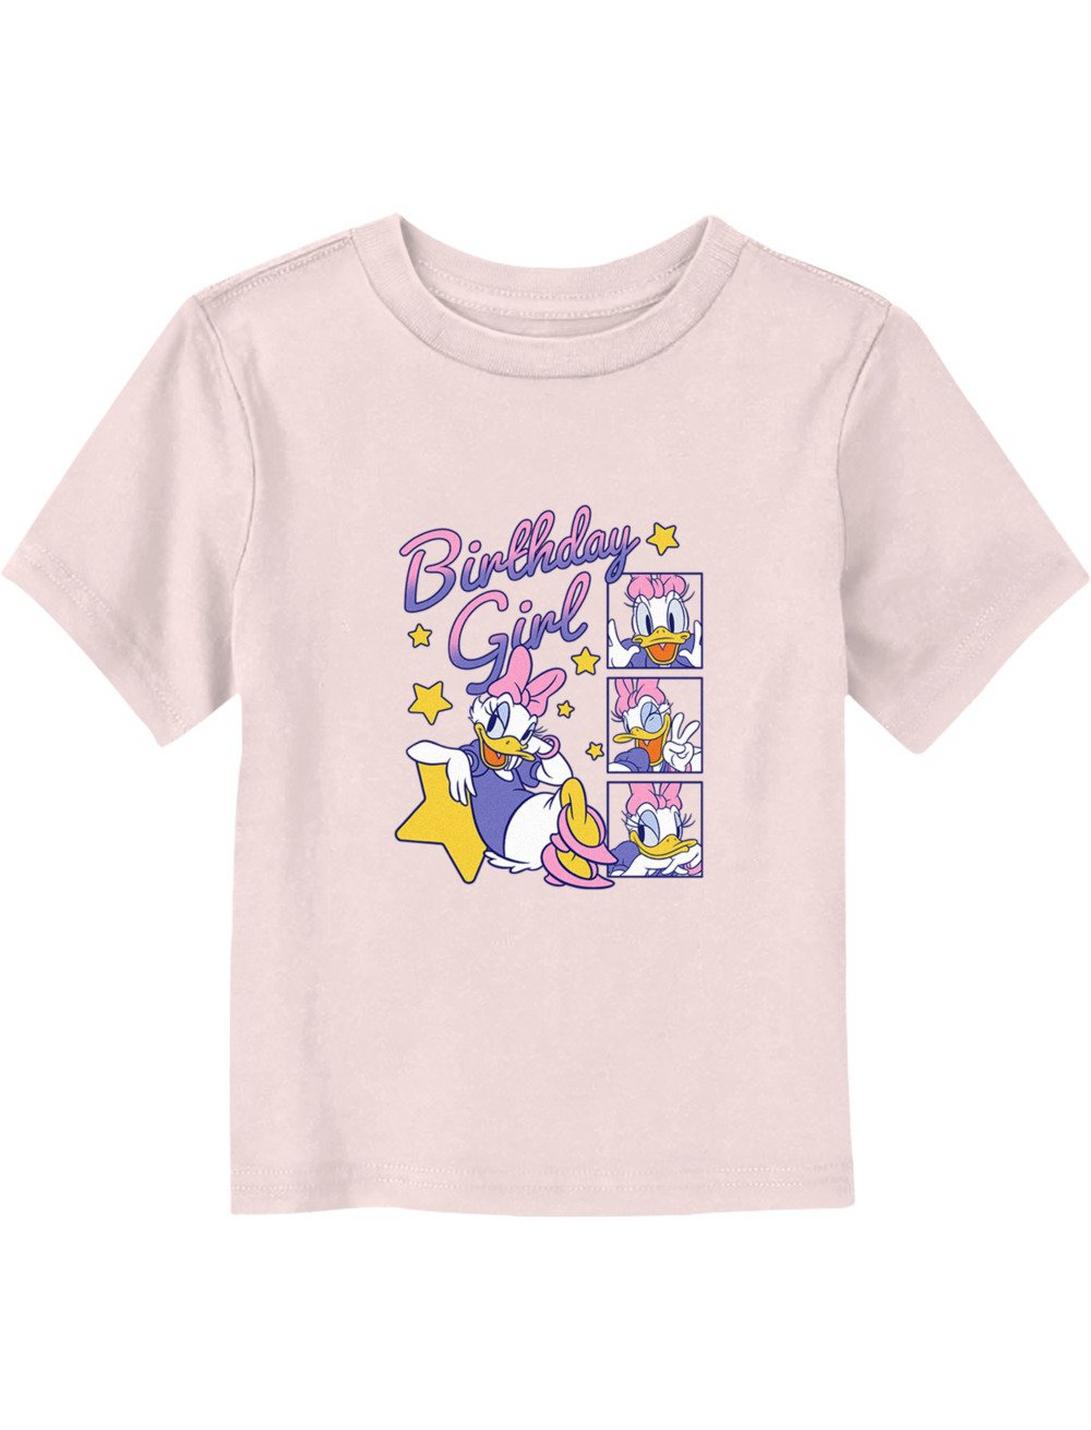 Disney Daisy Duck Birthday Girl Toddler T-Shirt, LIGHT PINK, hi-res